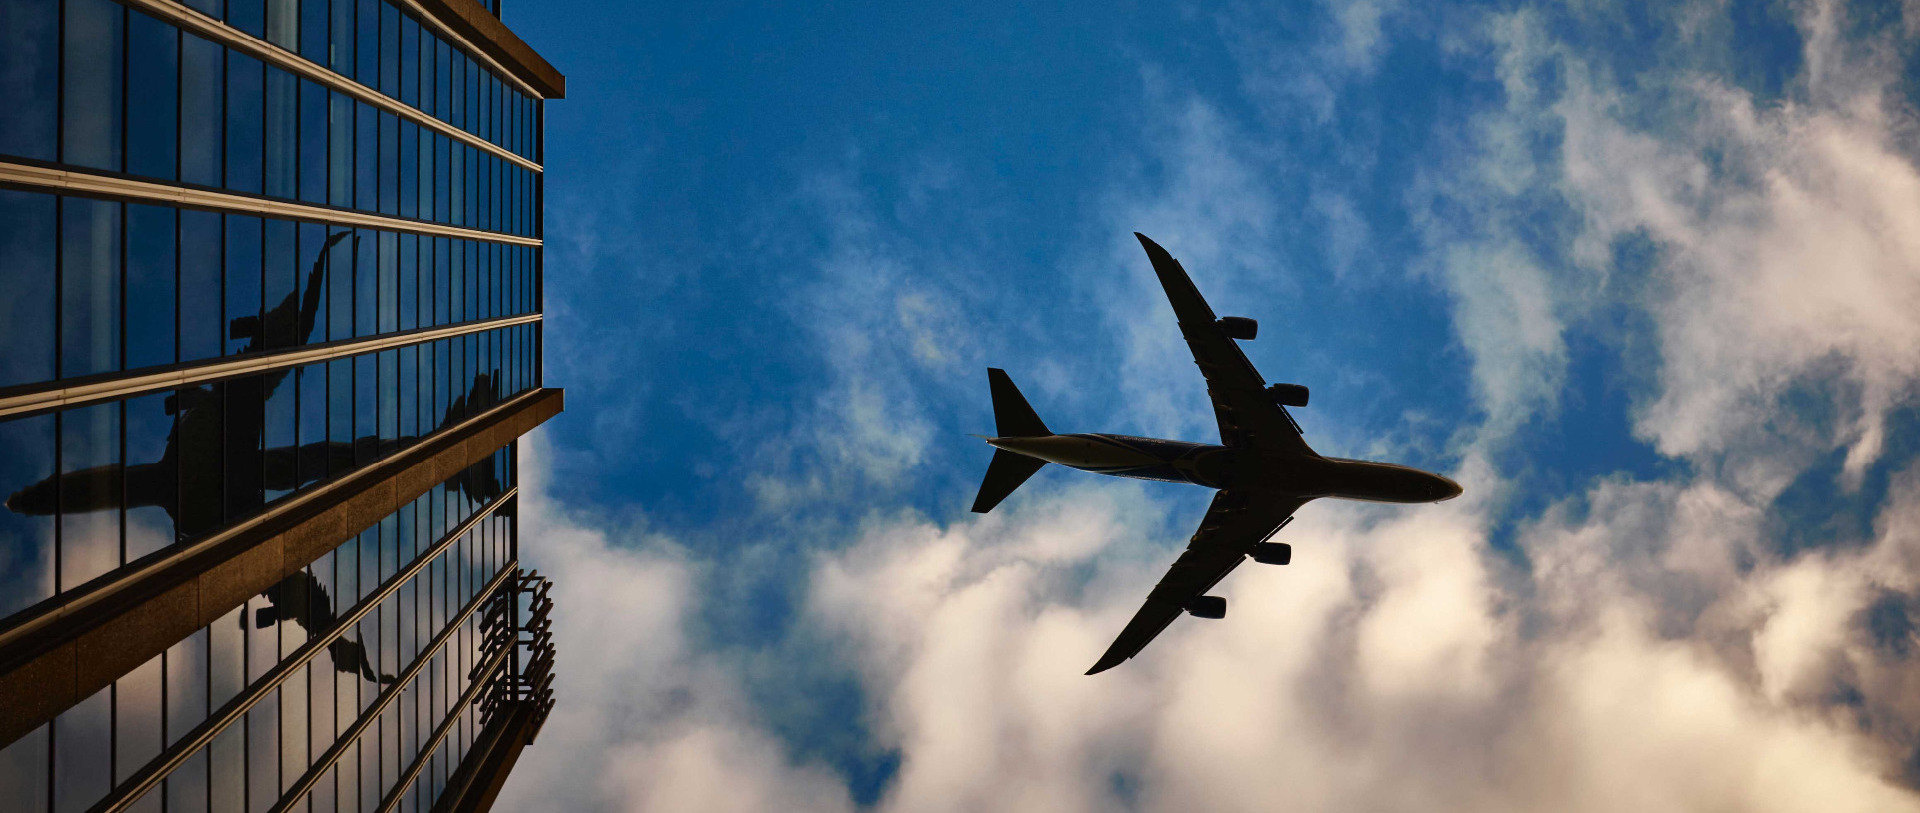 Jet passanger plan against a blue sky flying over an office block